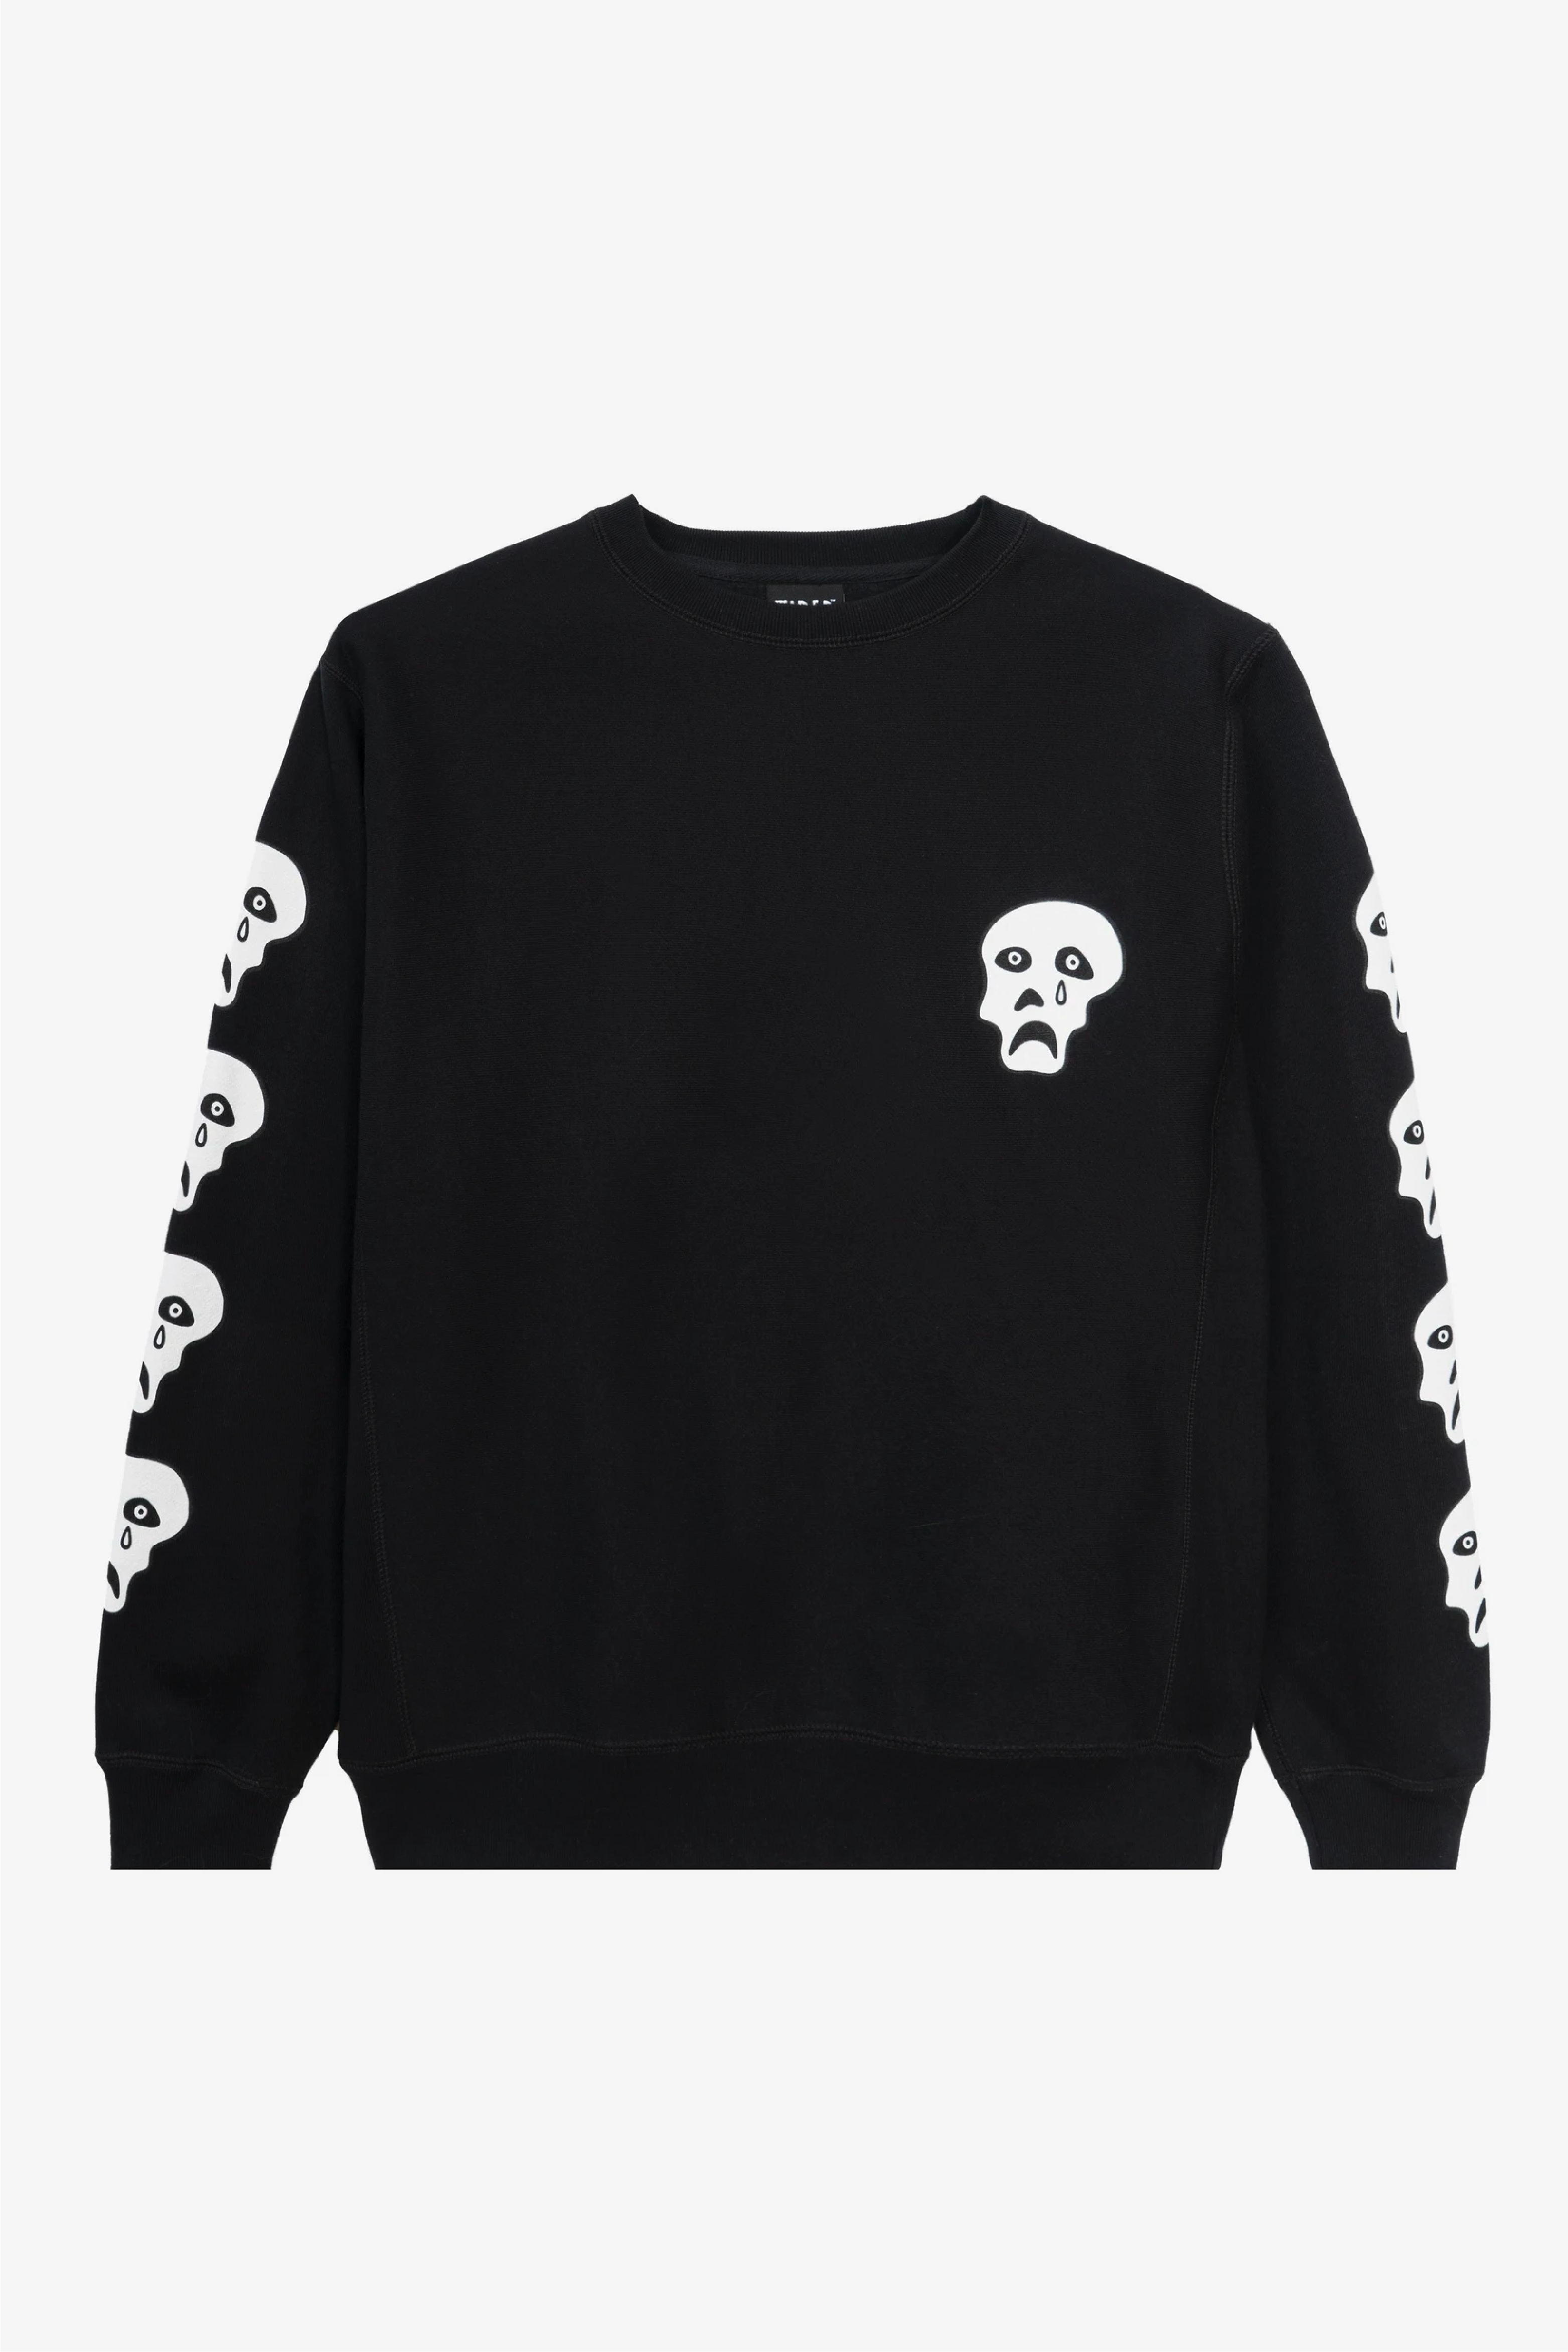 Selectshop FRAME - TIRED Sad Skulls Crewneck Sweater Sweats-knits Dubai